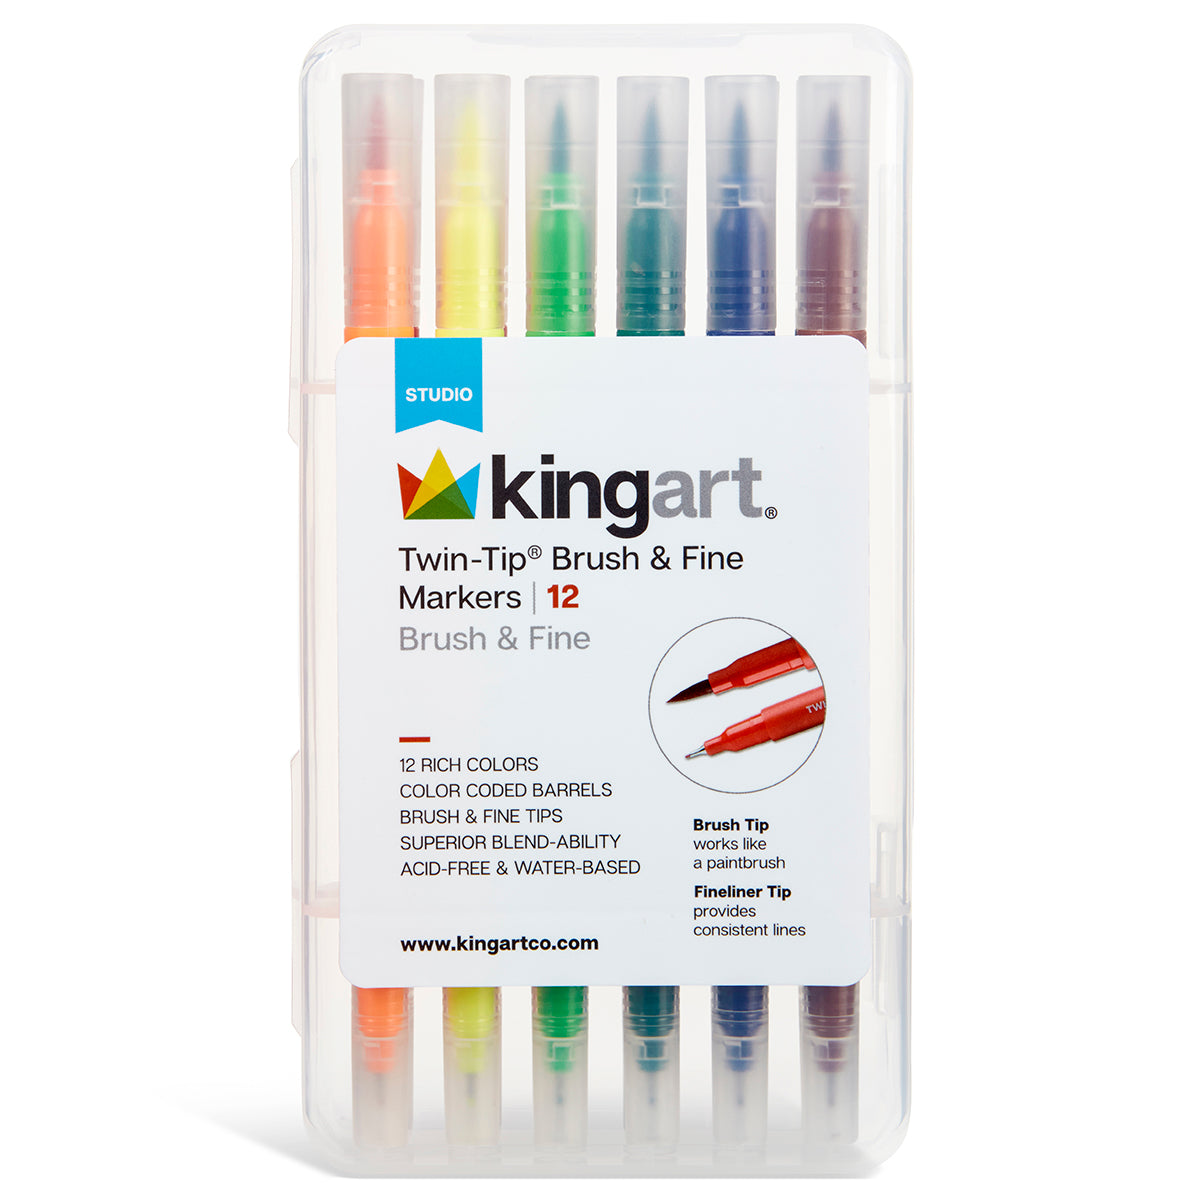 Dual Brush Marker Pens, 24 Colors Felt Tip Pen Set, Outline Markers Pens,  Fineliners Felt Pens, for Kids and Adults Drawing Sketching Design